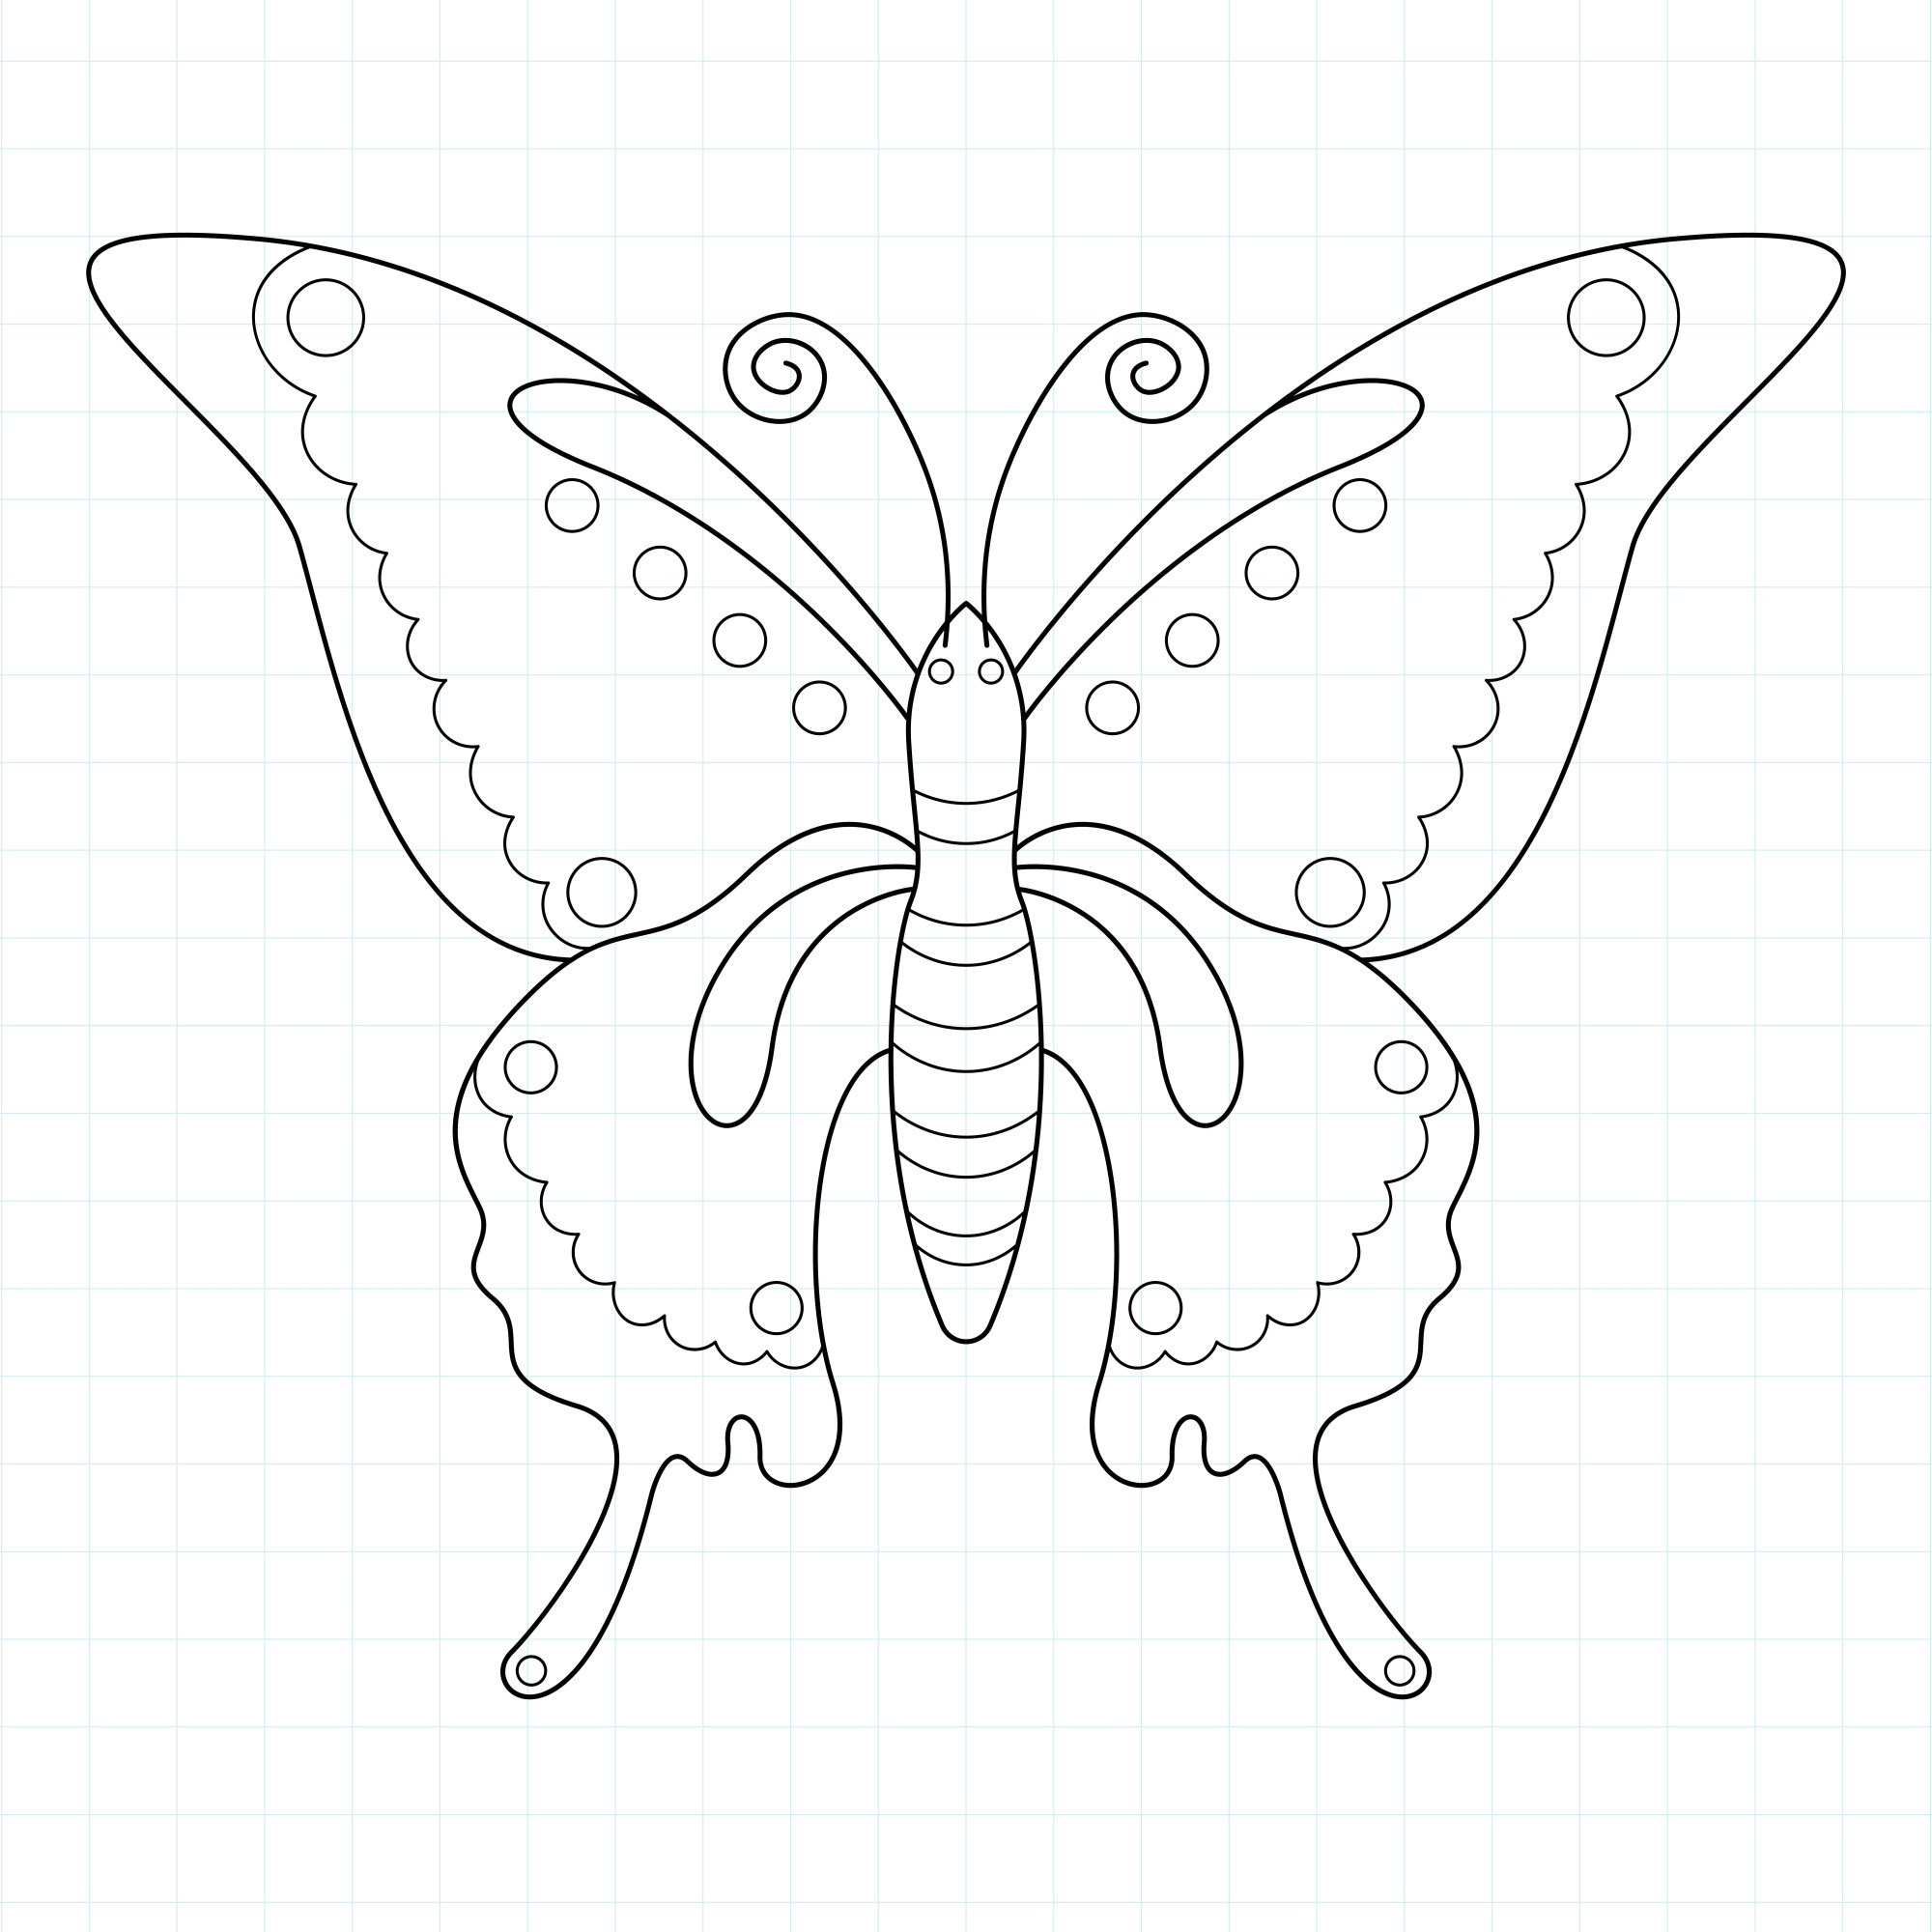 Раскраска для детей: крупная бабочка